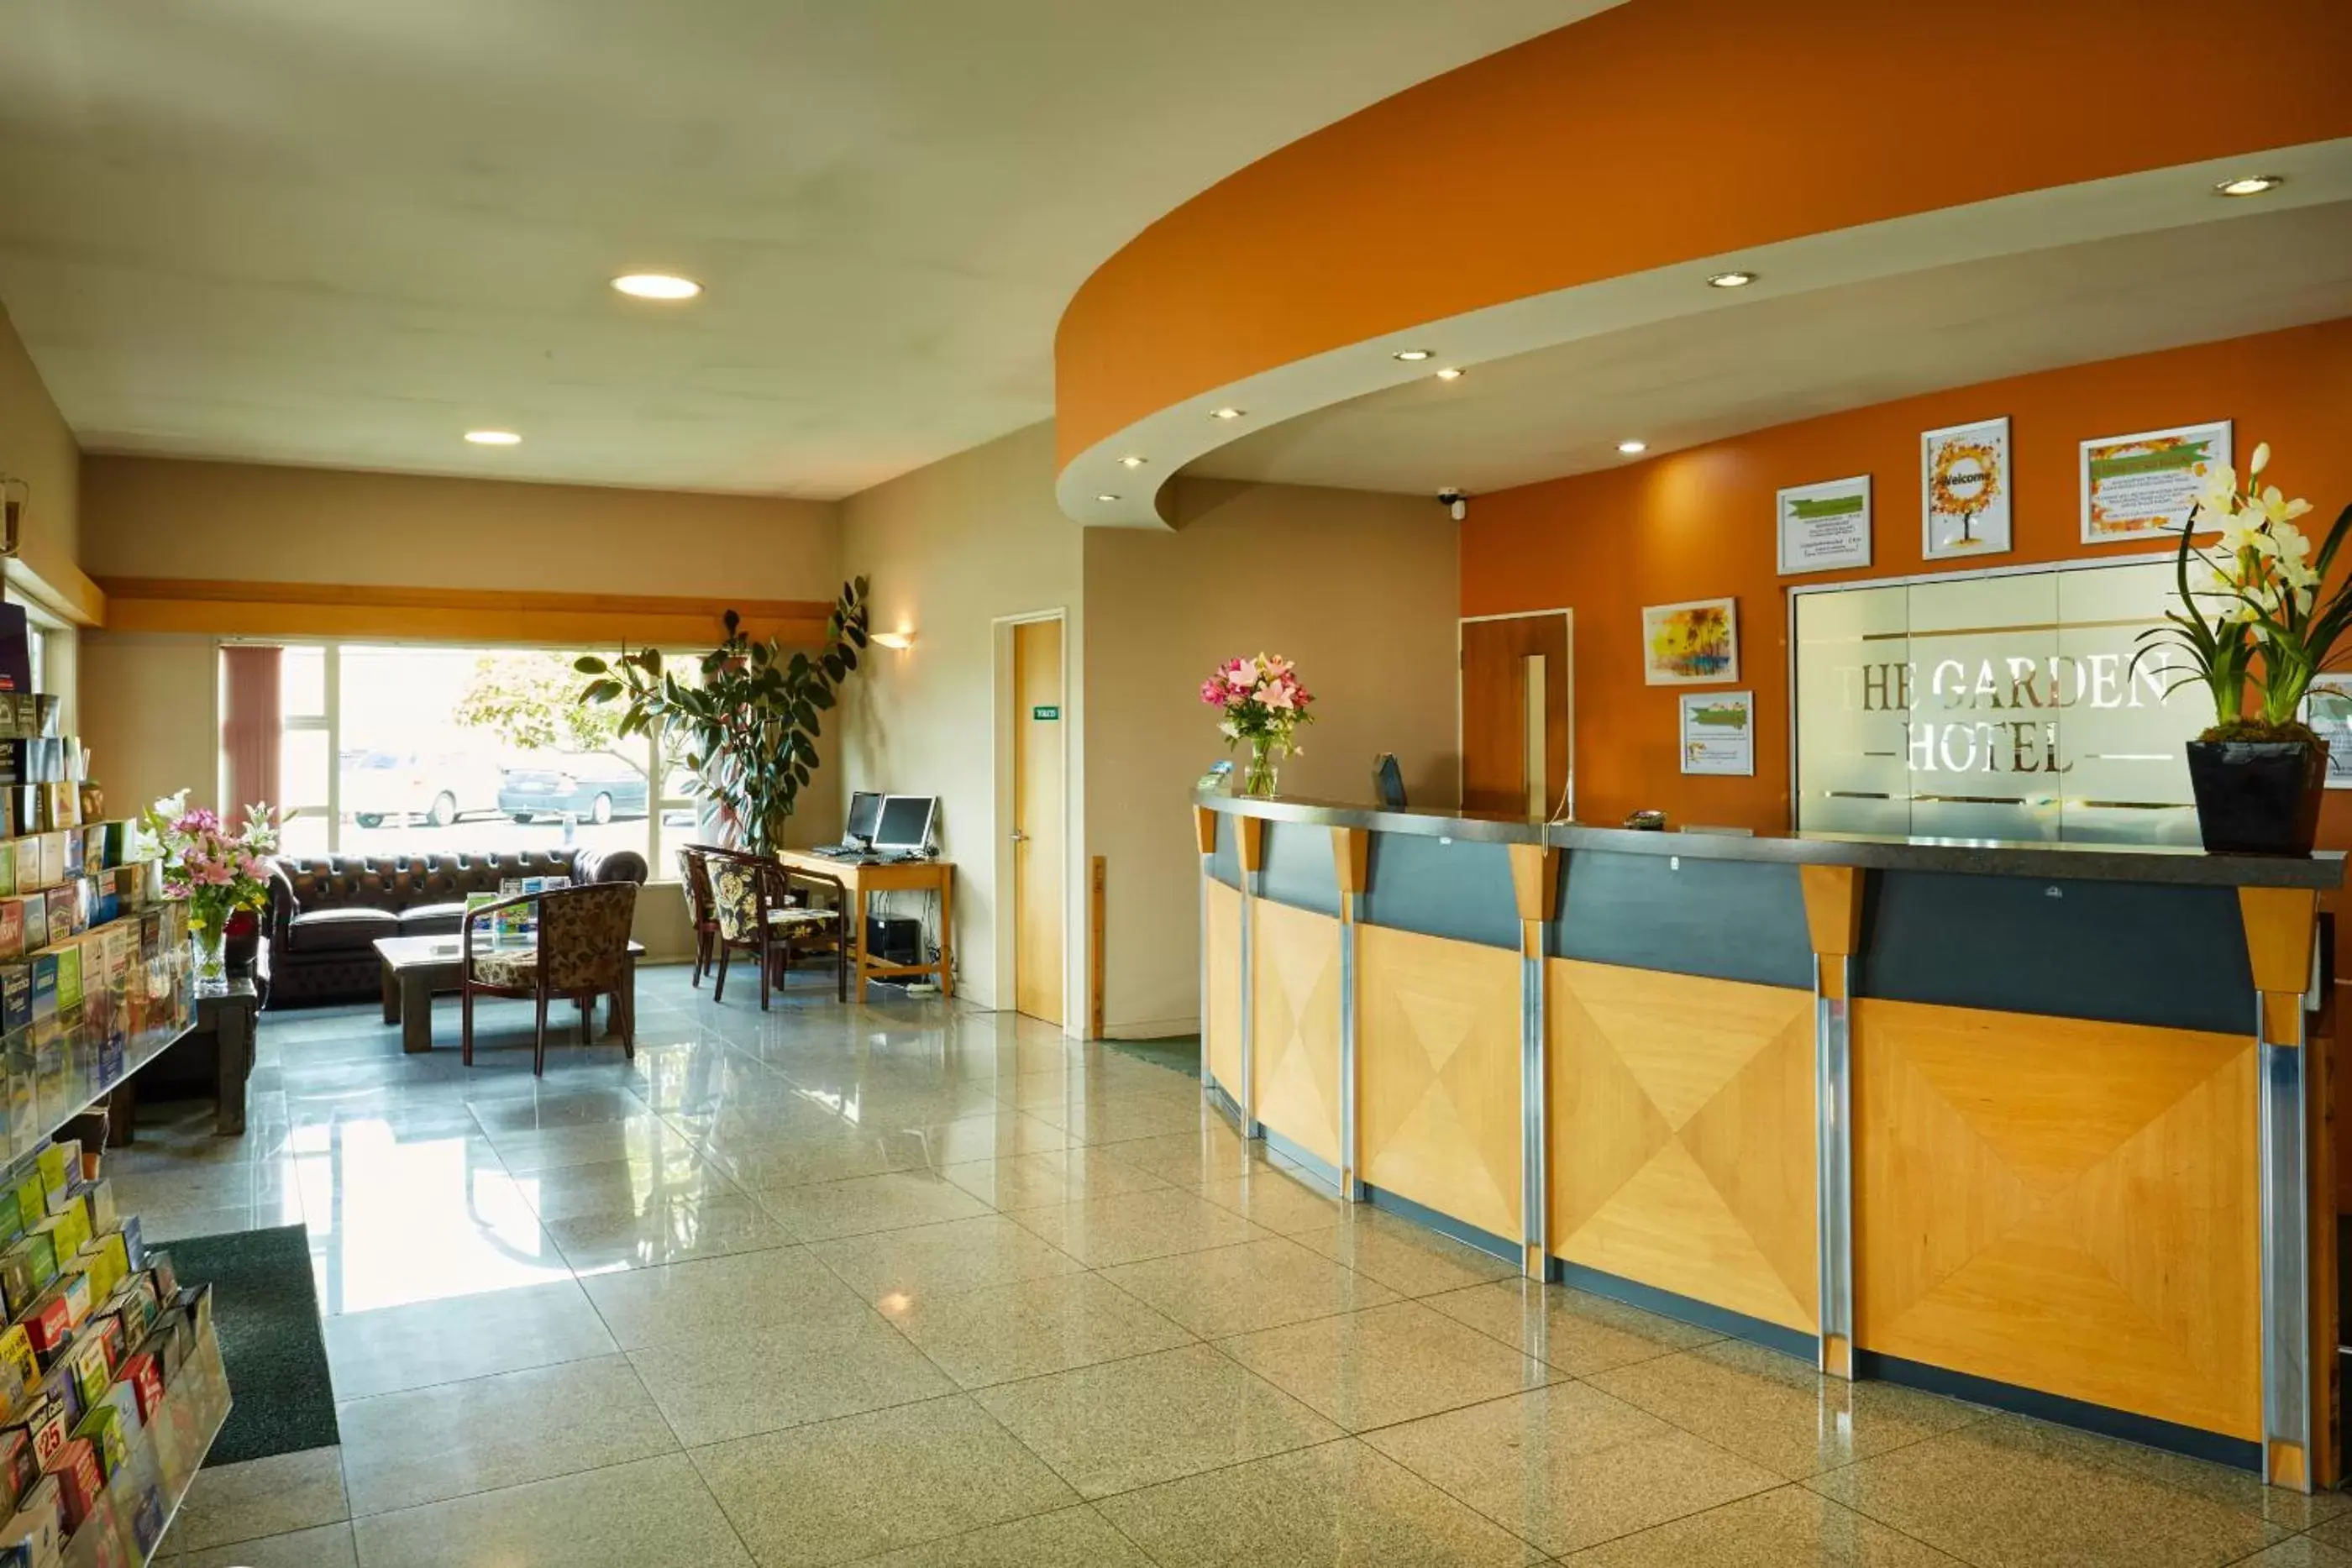 Lobby or reception, Lobby/Reception in The Garden Hotel